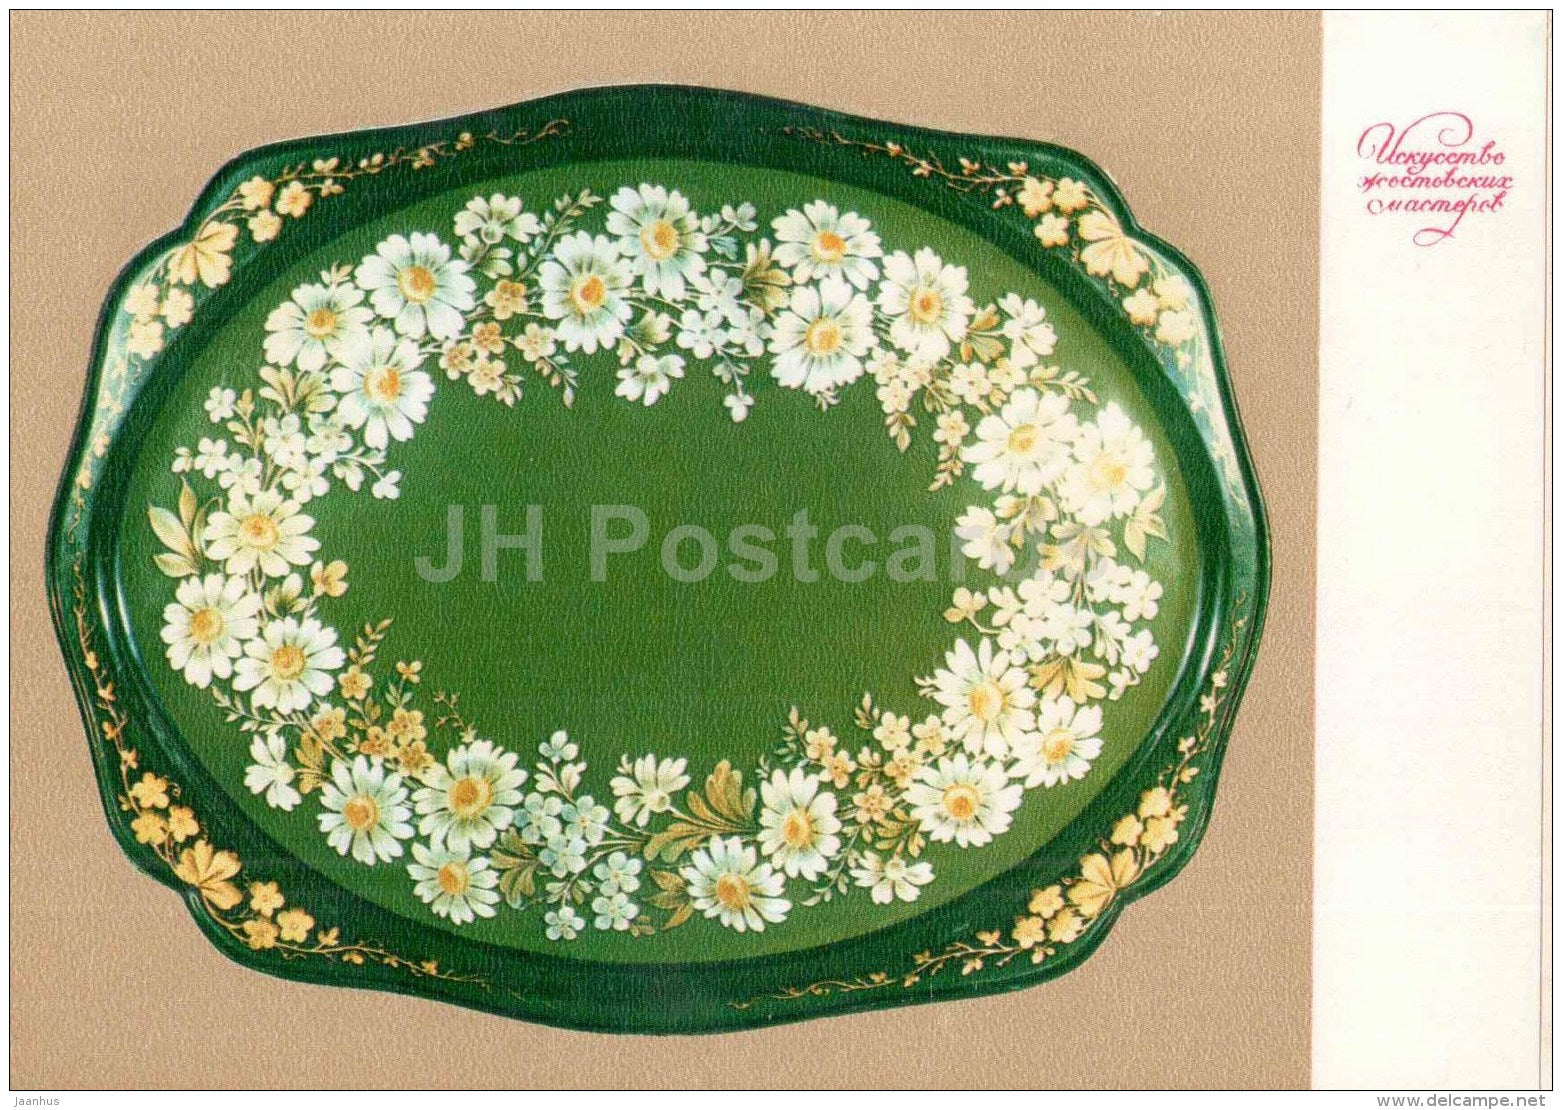 Daisy Chain by N. Mazhayev - Art of Zhostovo Masters - folk art - decorated trays - 1979 - Russia USSR - unused - JH Postcards